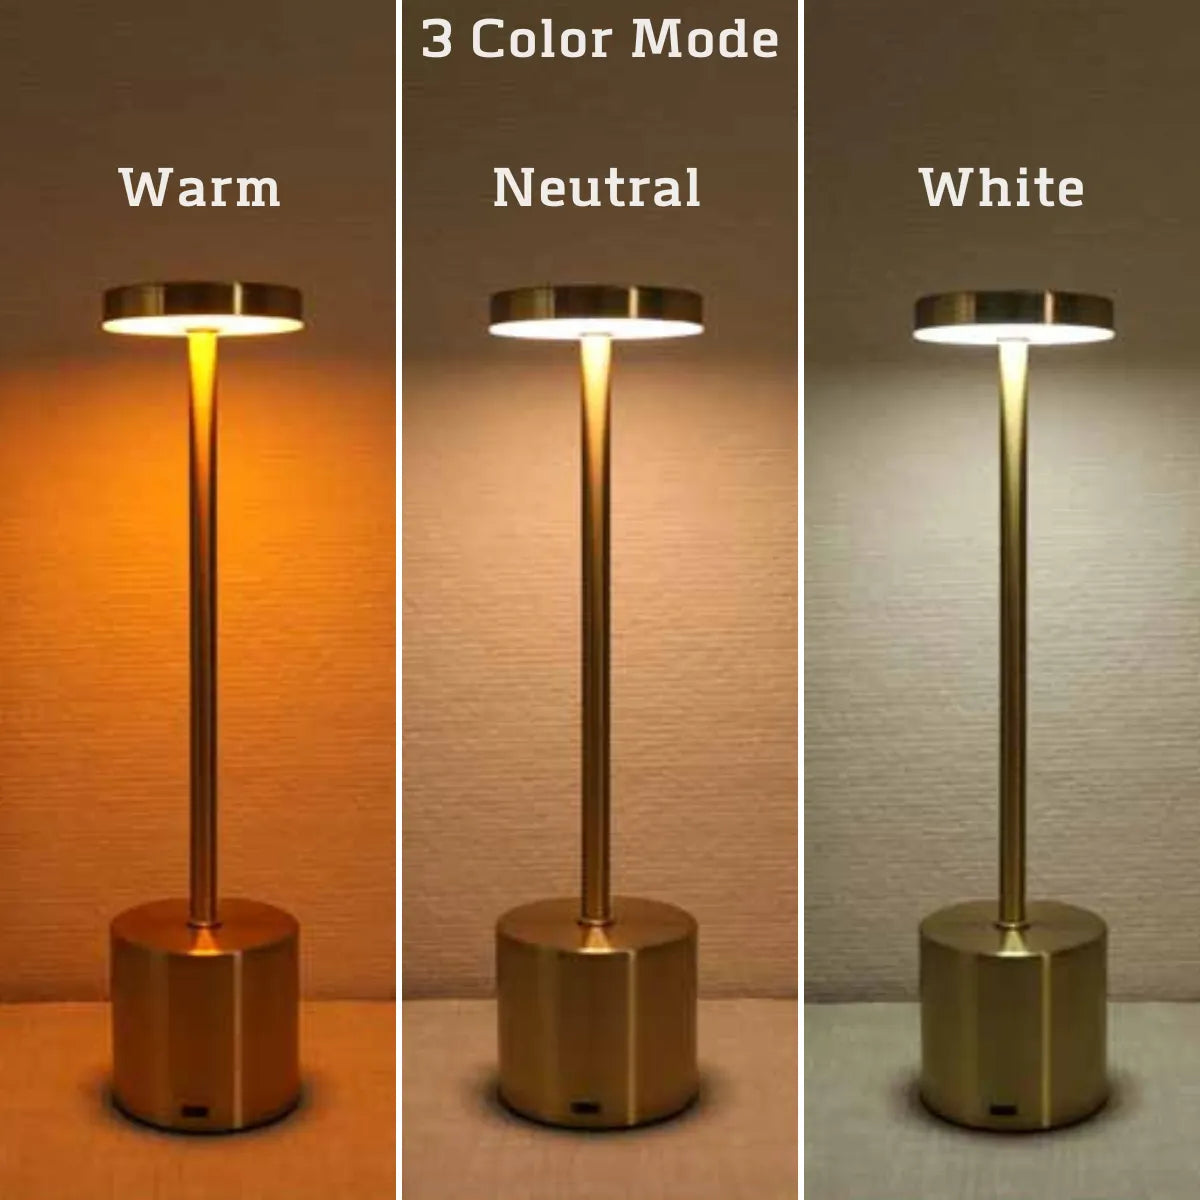 Minimalistic Lamp